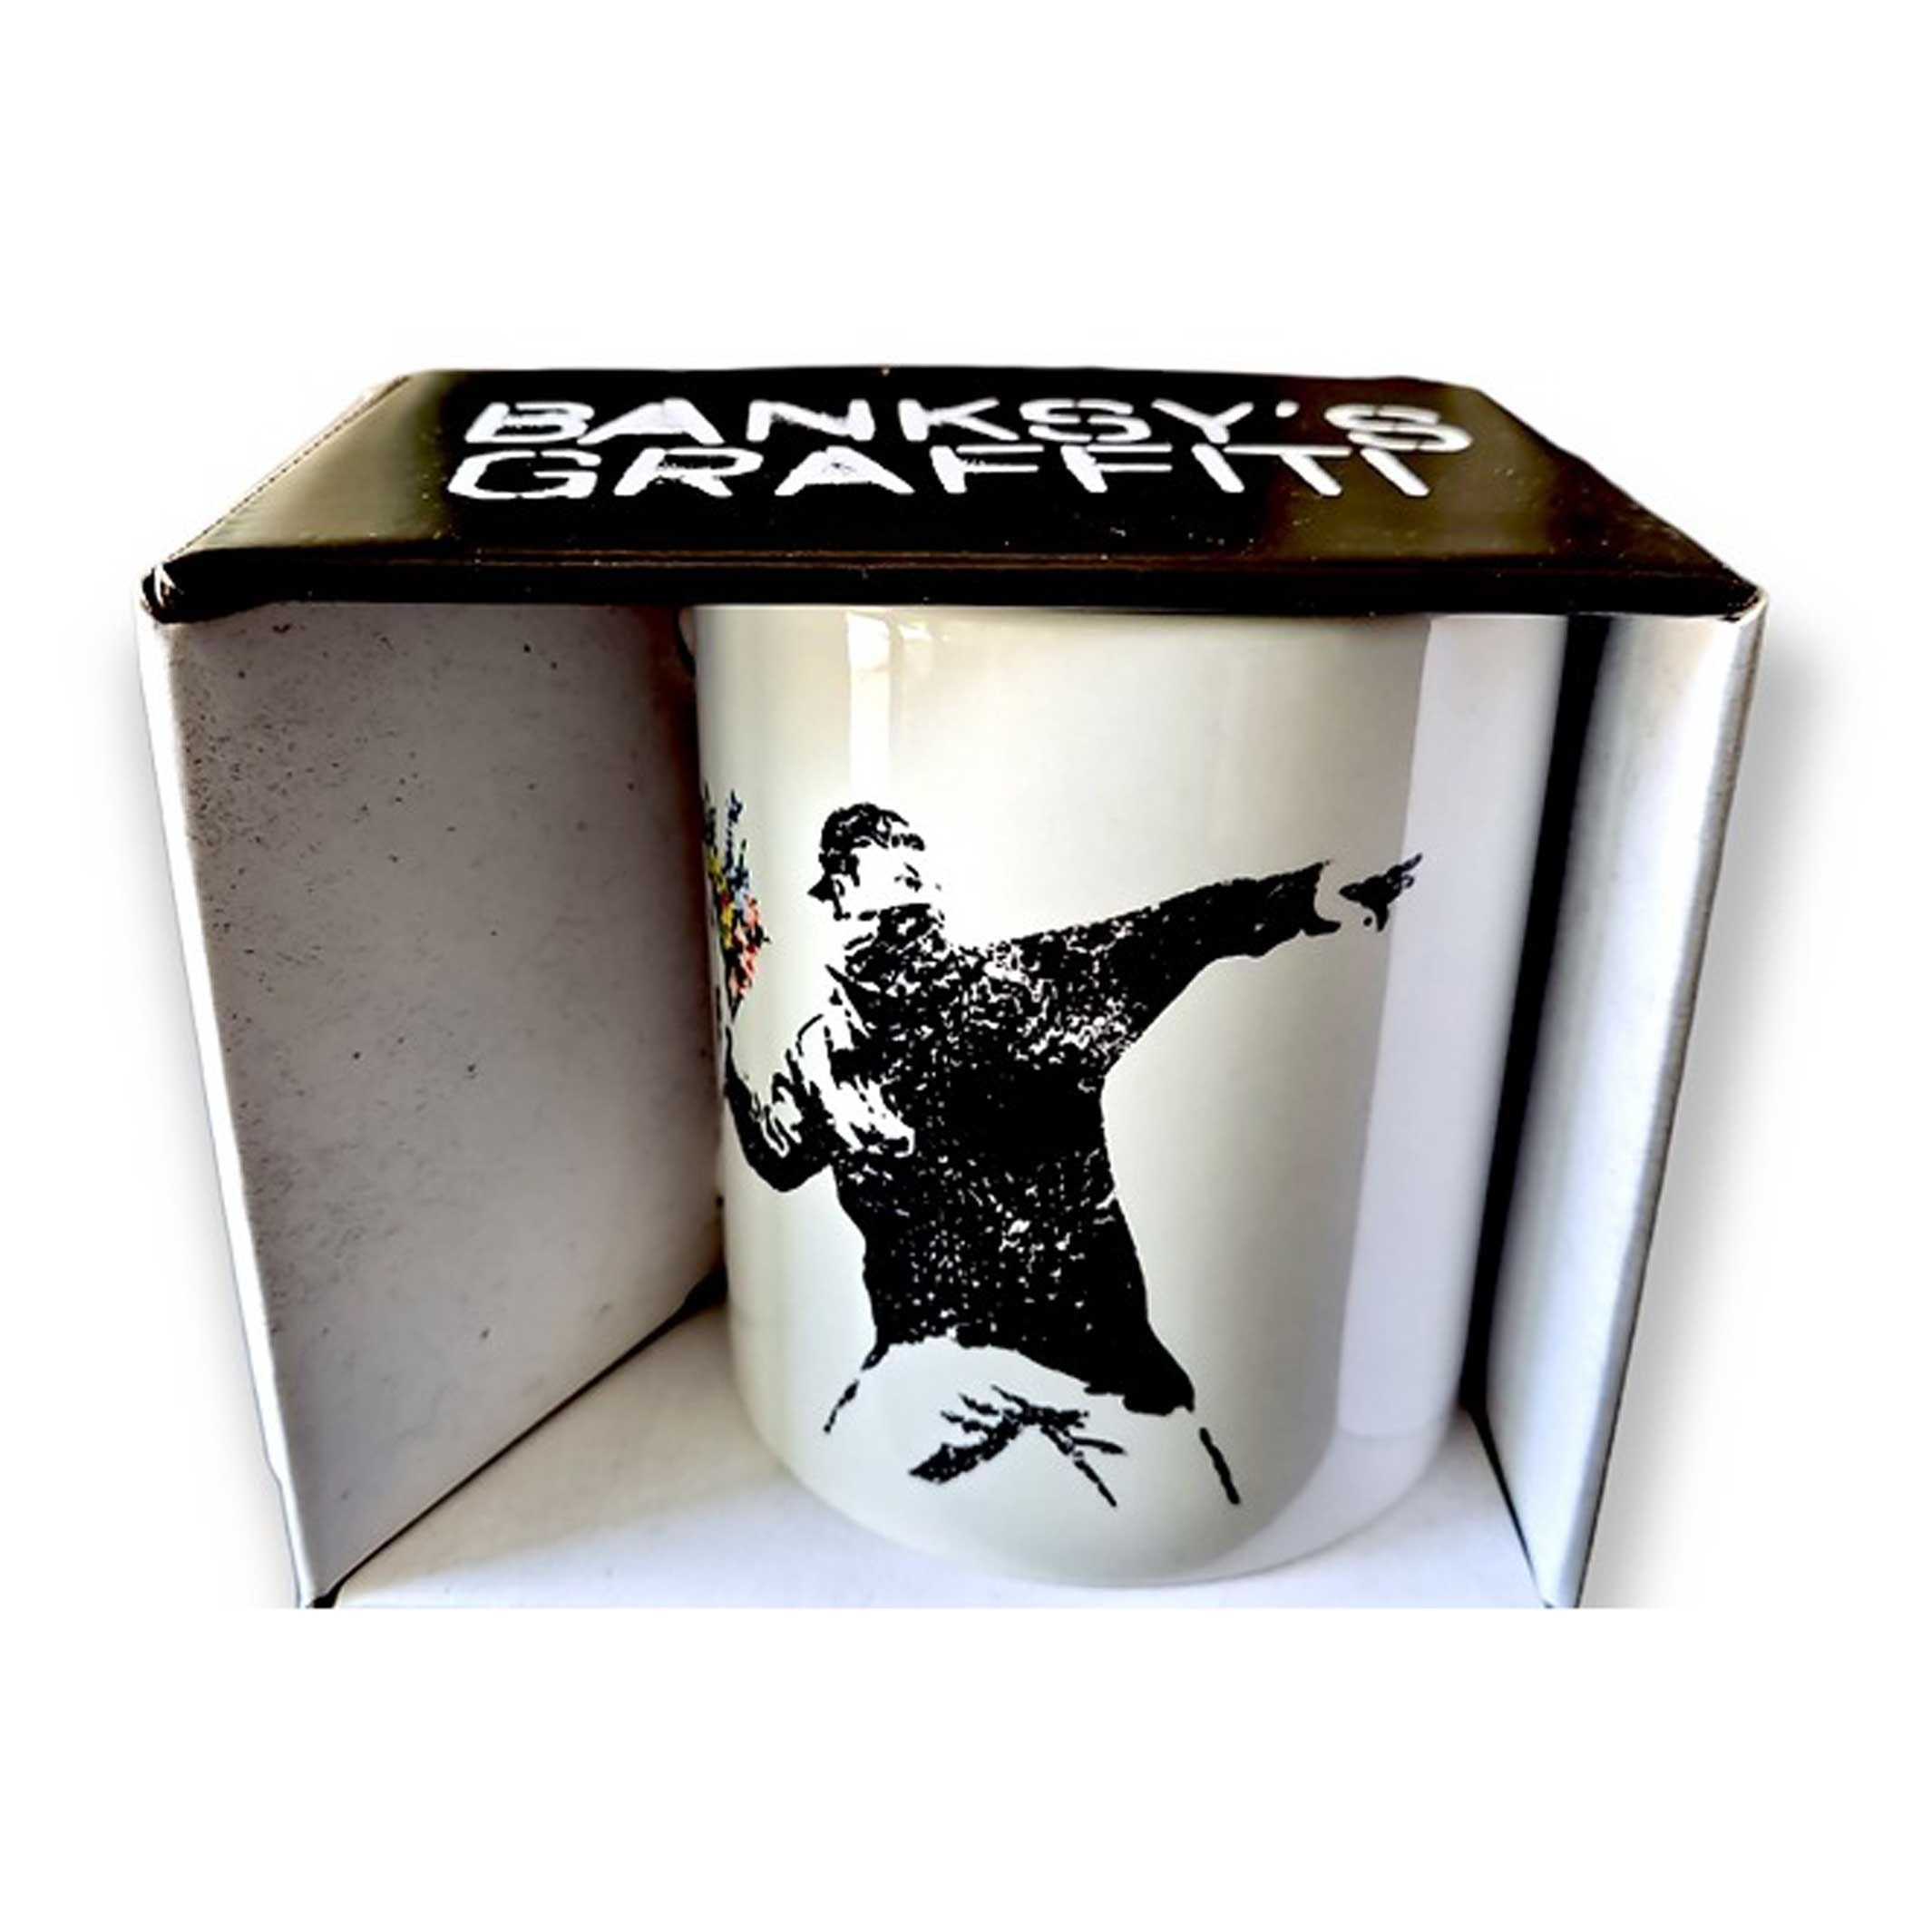 The FLOWER THROWER | Banksy COFFEE & TEA MUG | Urban.ity